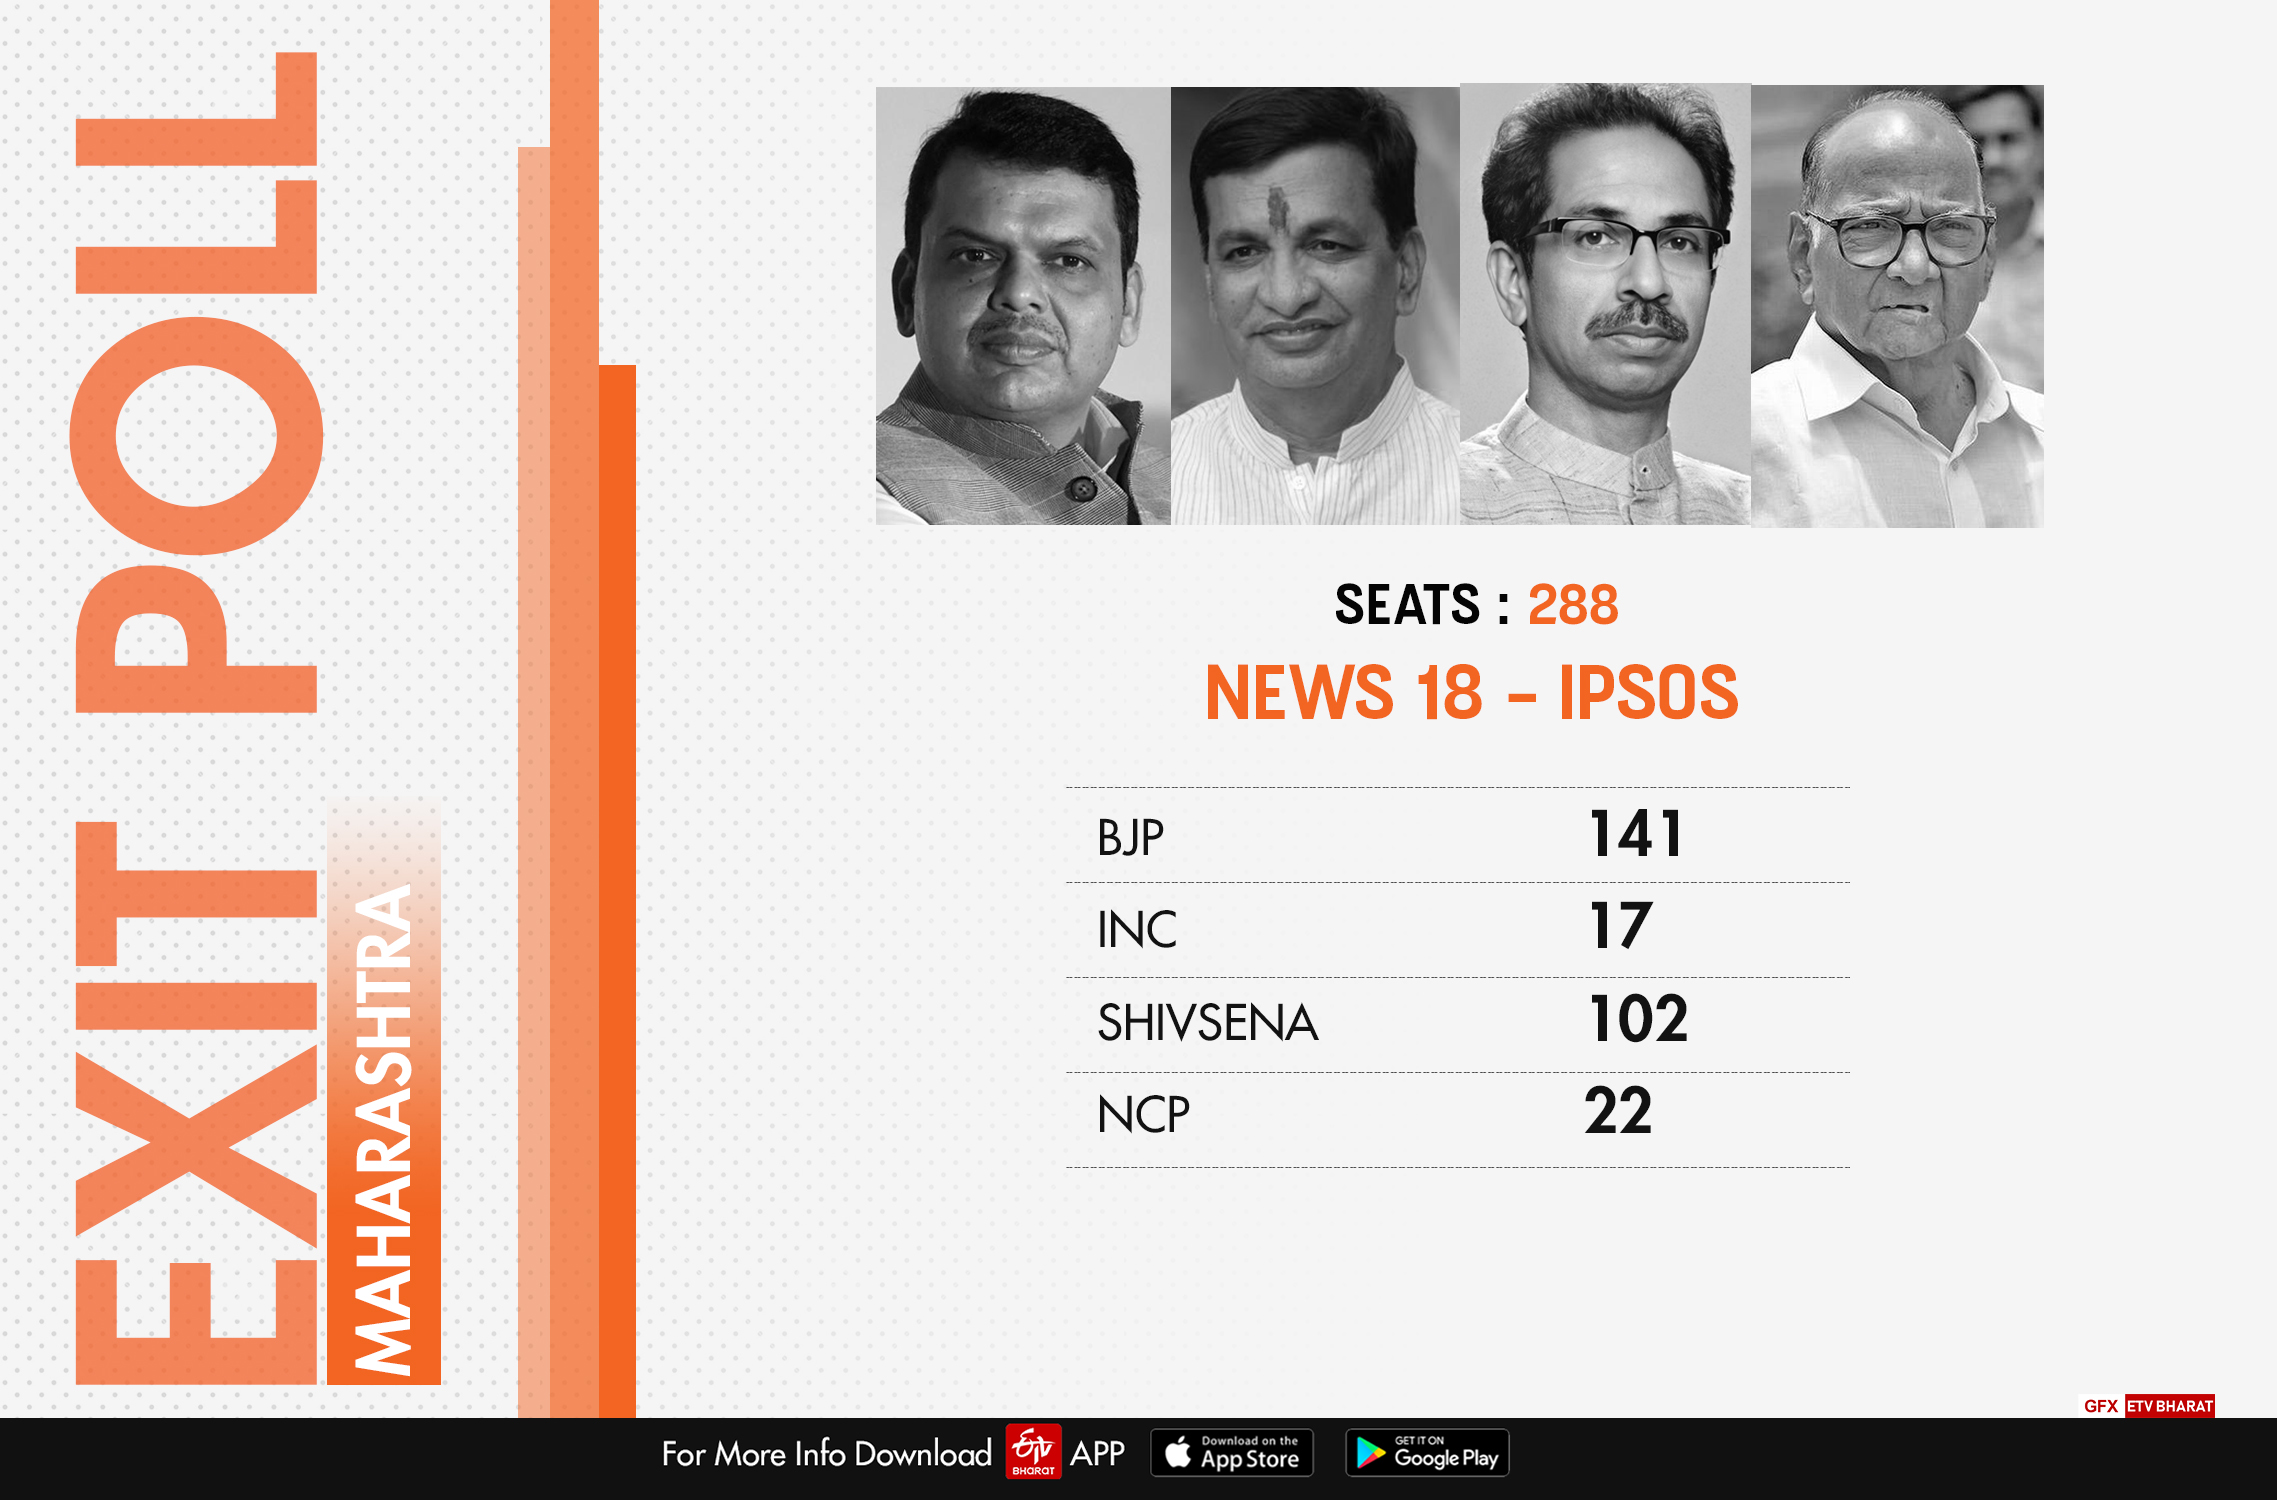 News 18- IPSOS exit polls